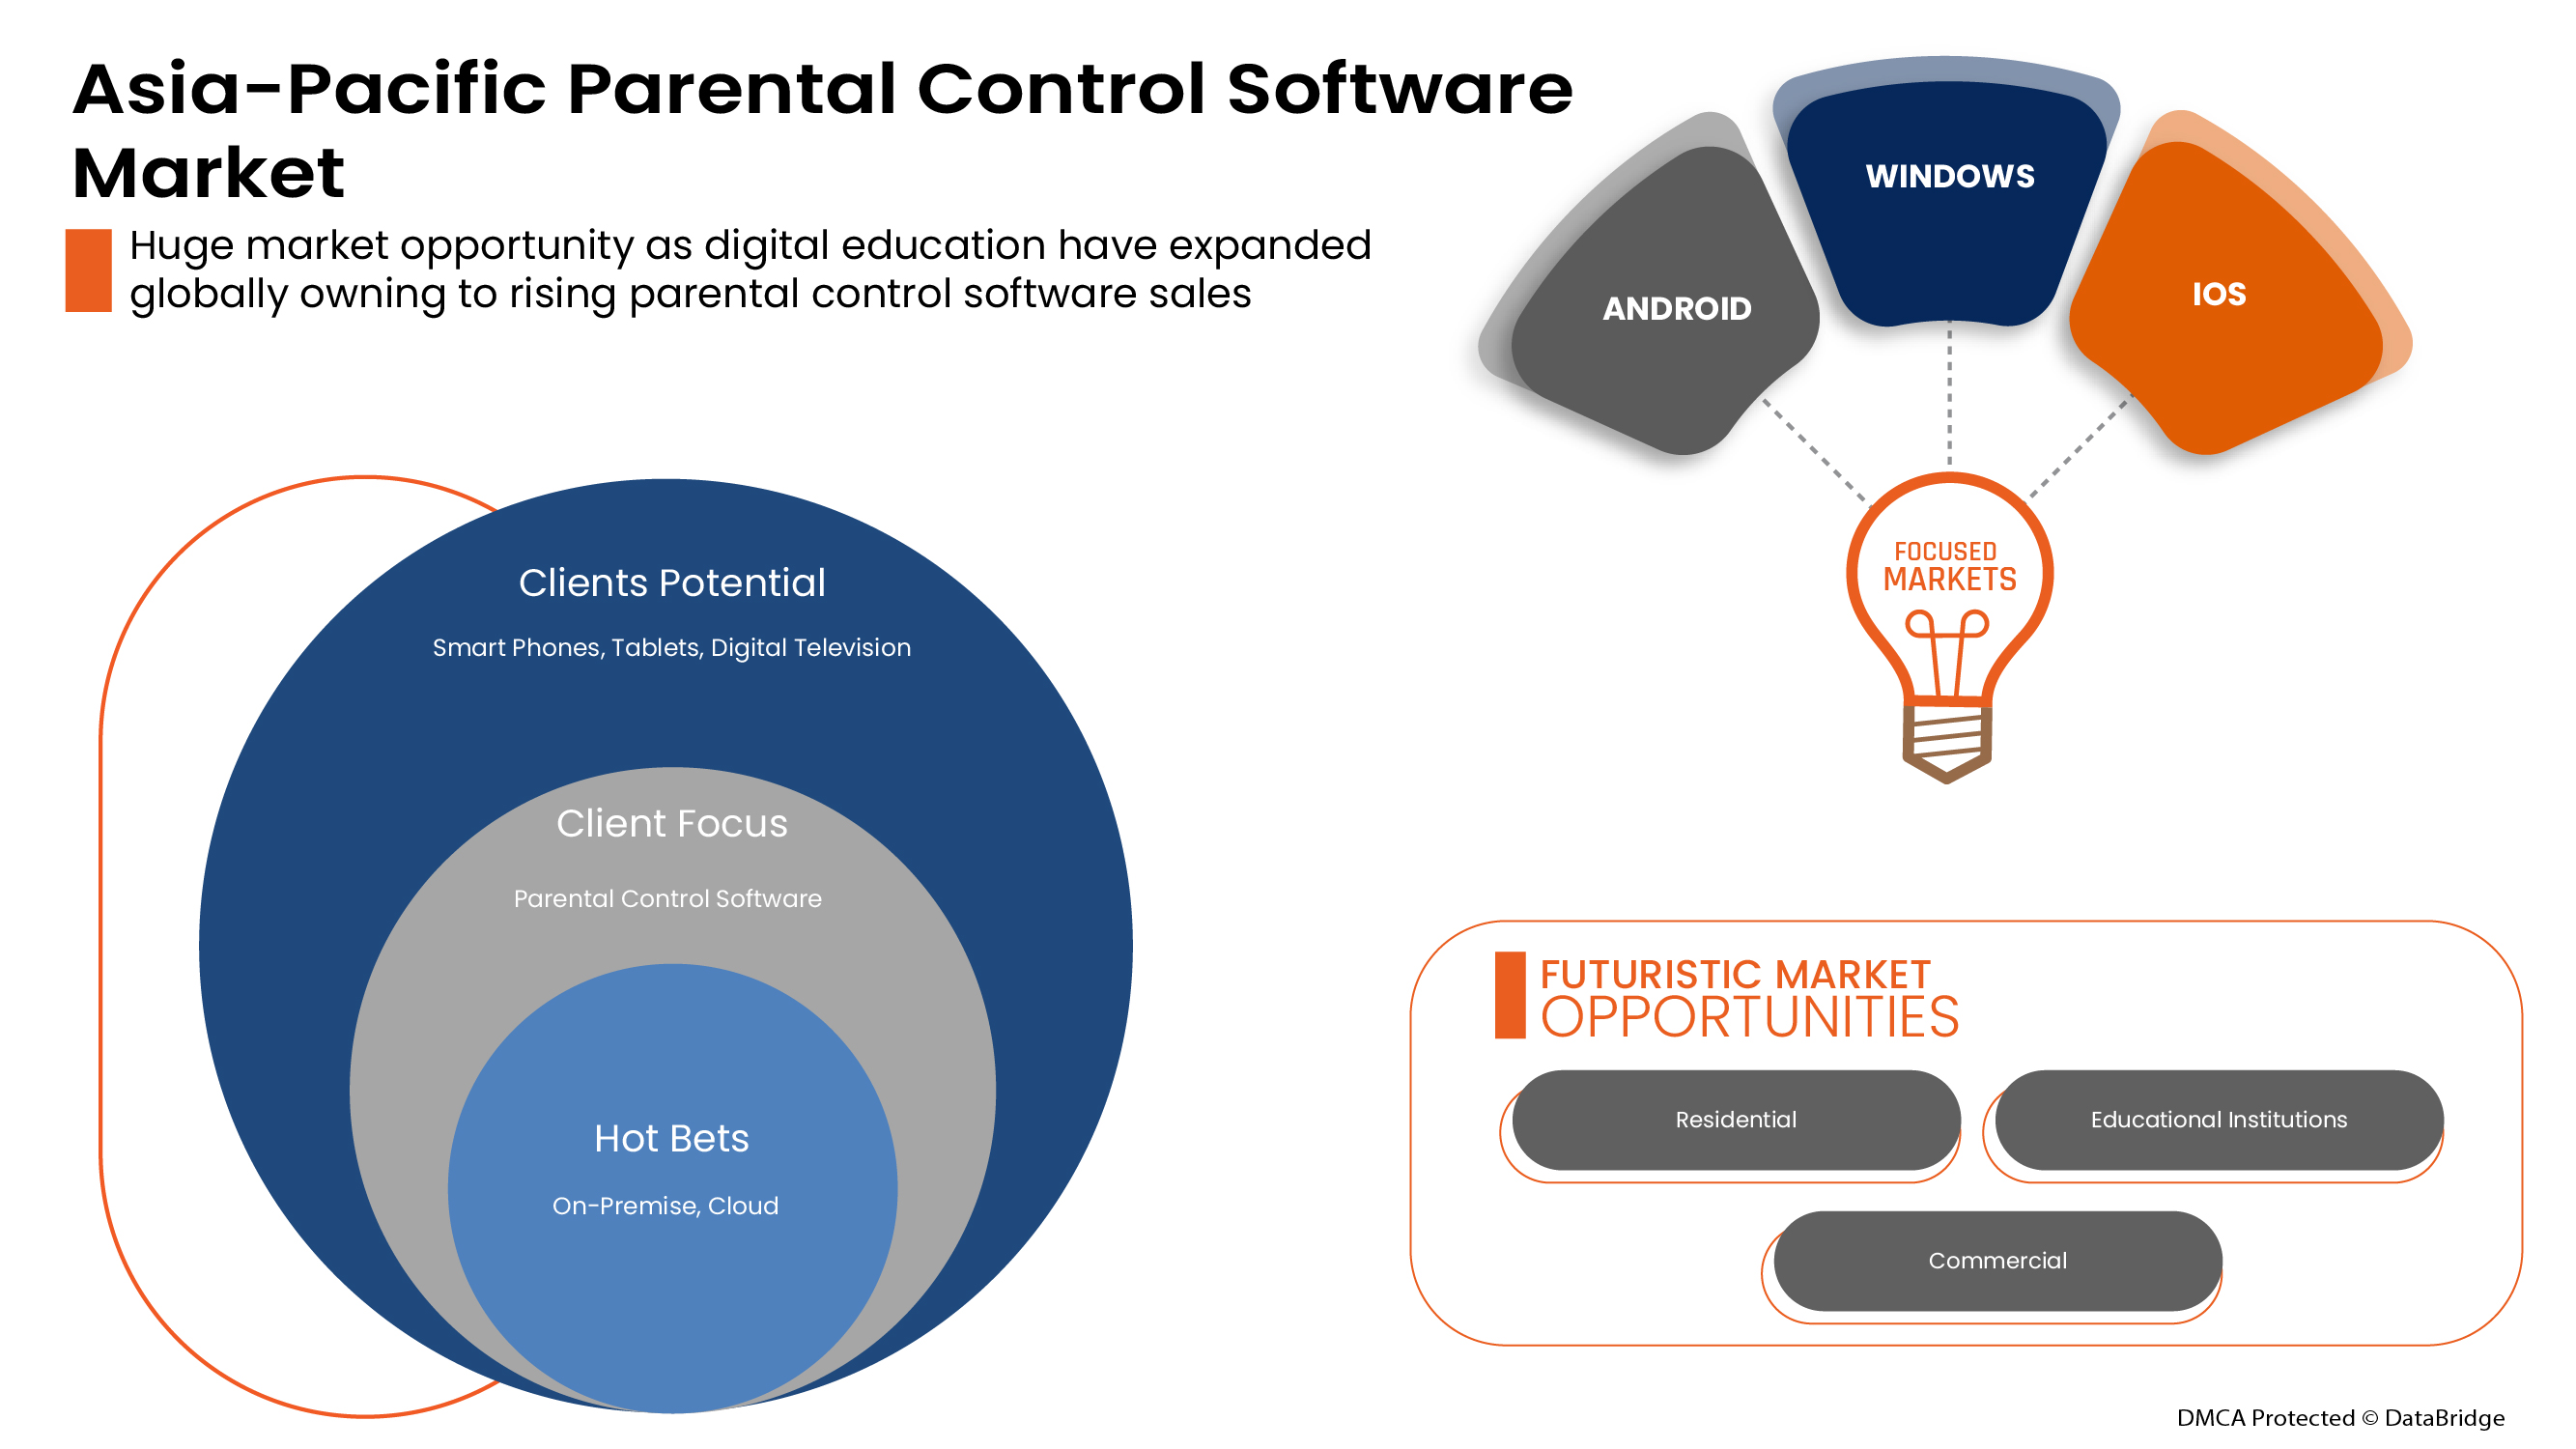 Parental Control Software Market